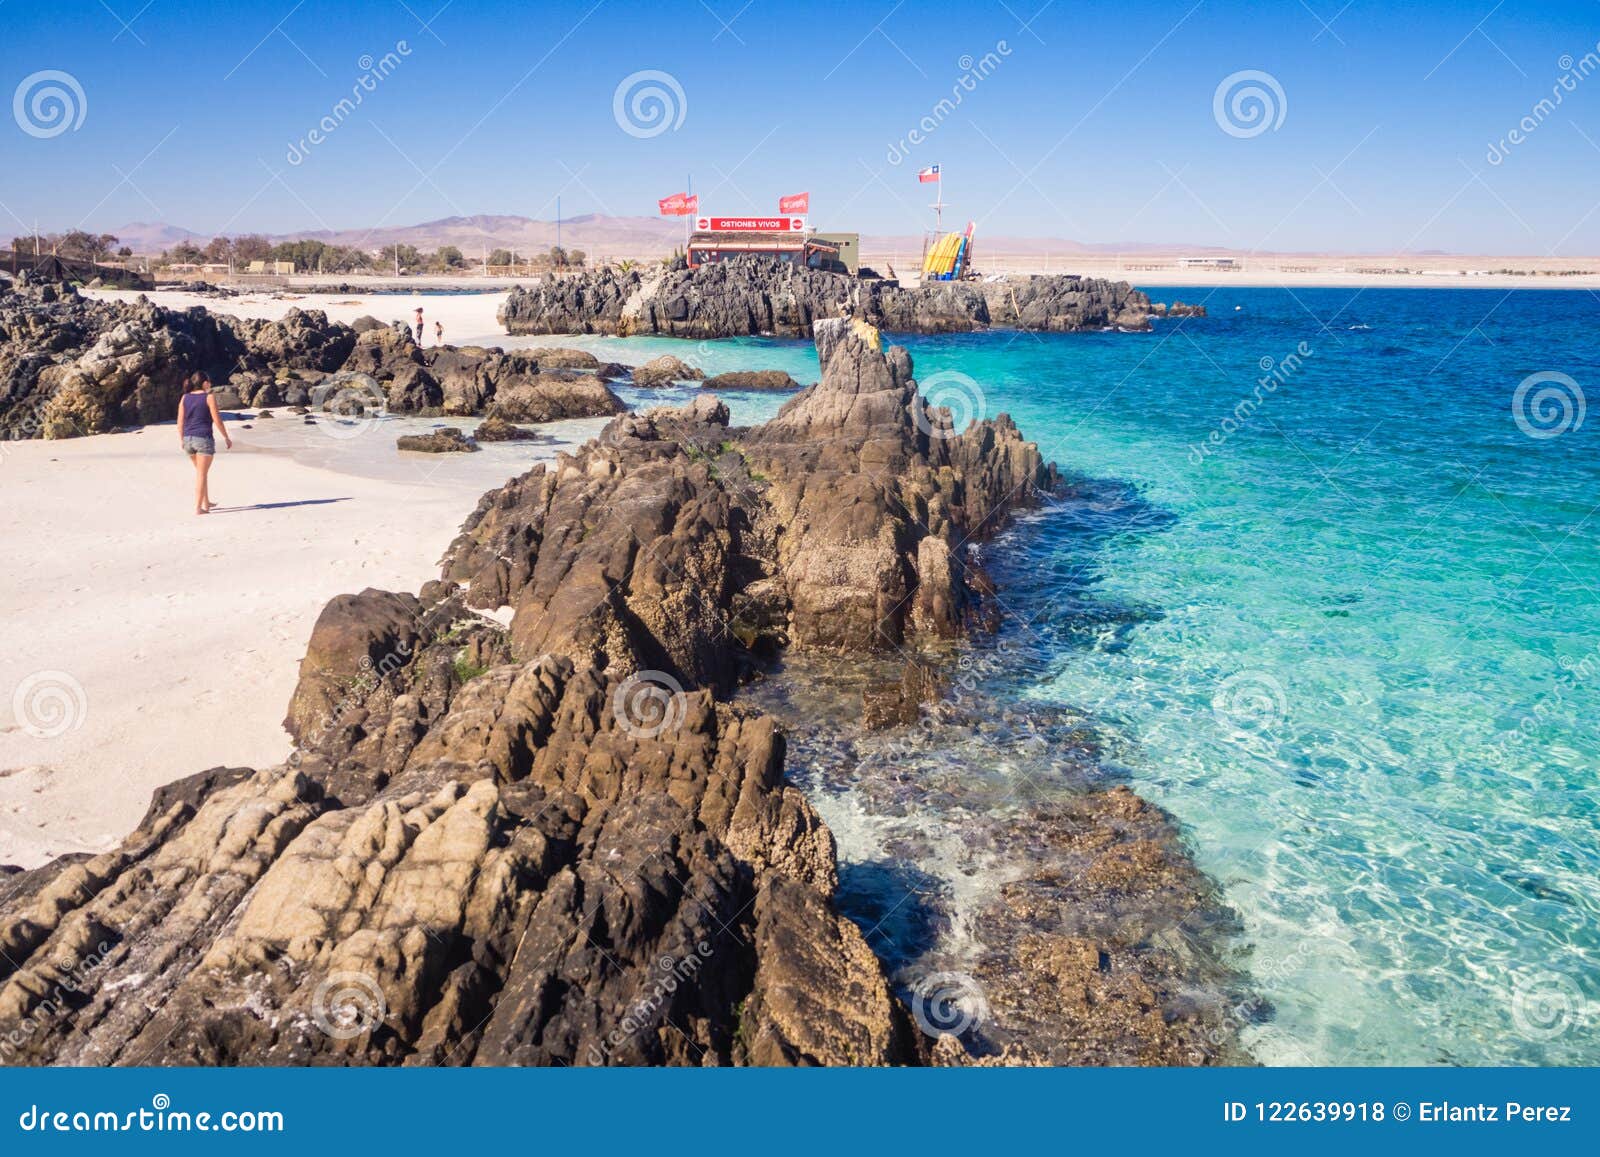 white sand beach and turquoise sea in bahia inglesa, chile.